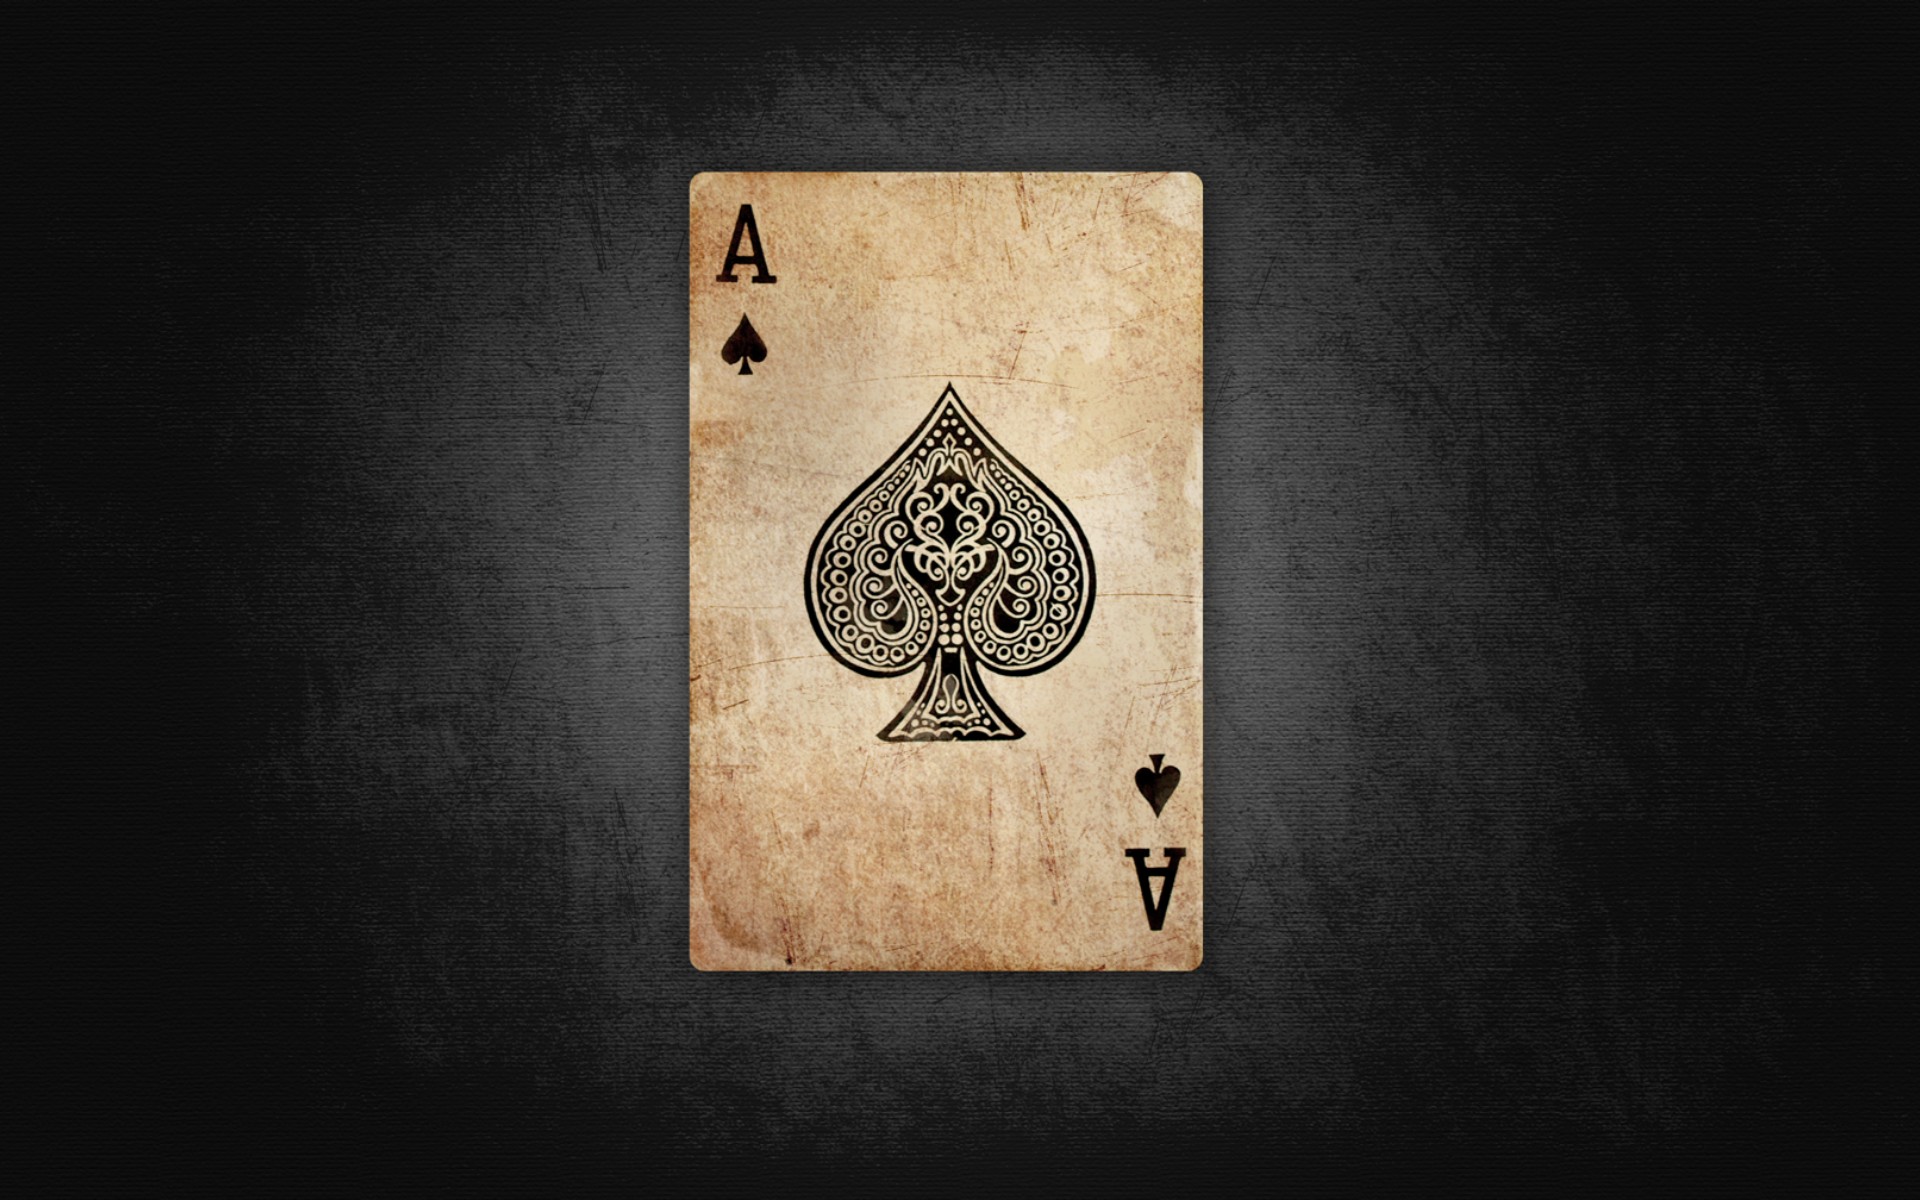 black, playing cards, ace of spades - desktop wallpaper